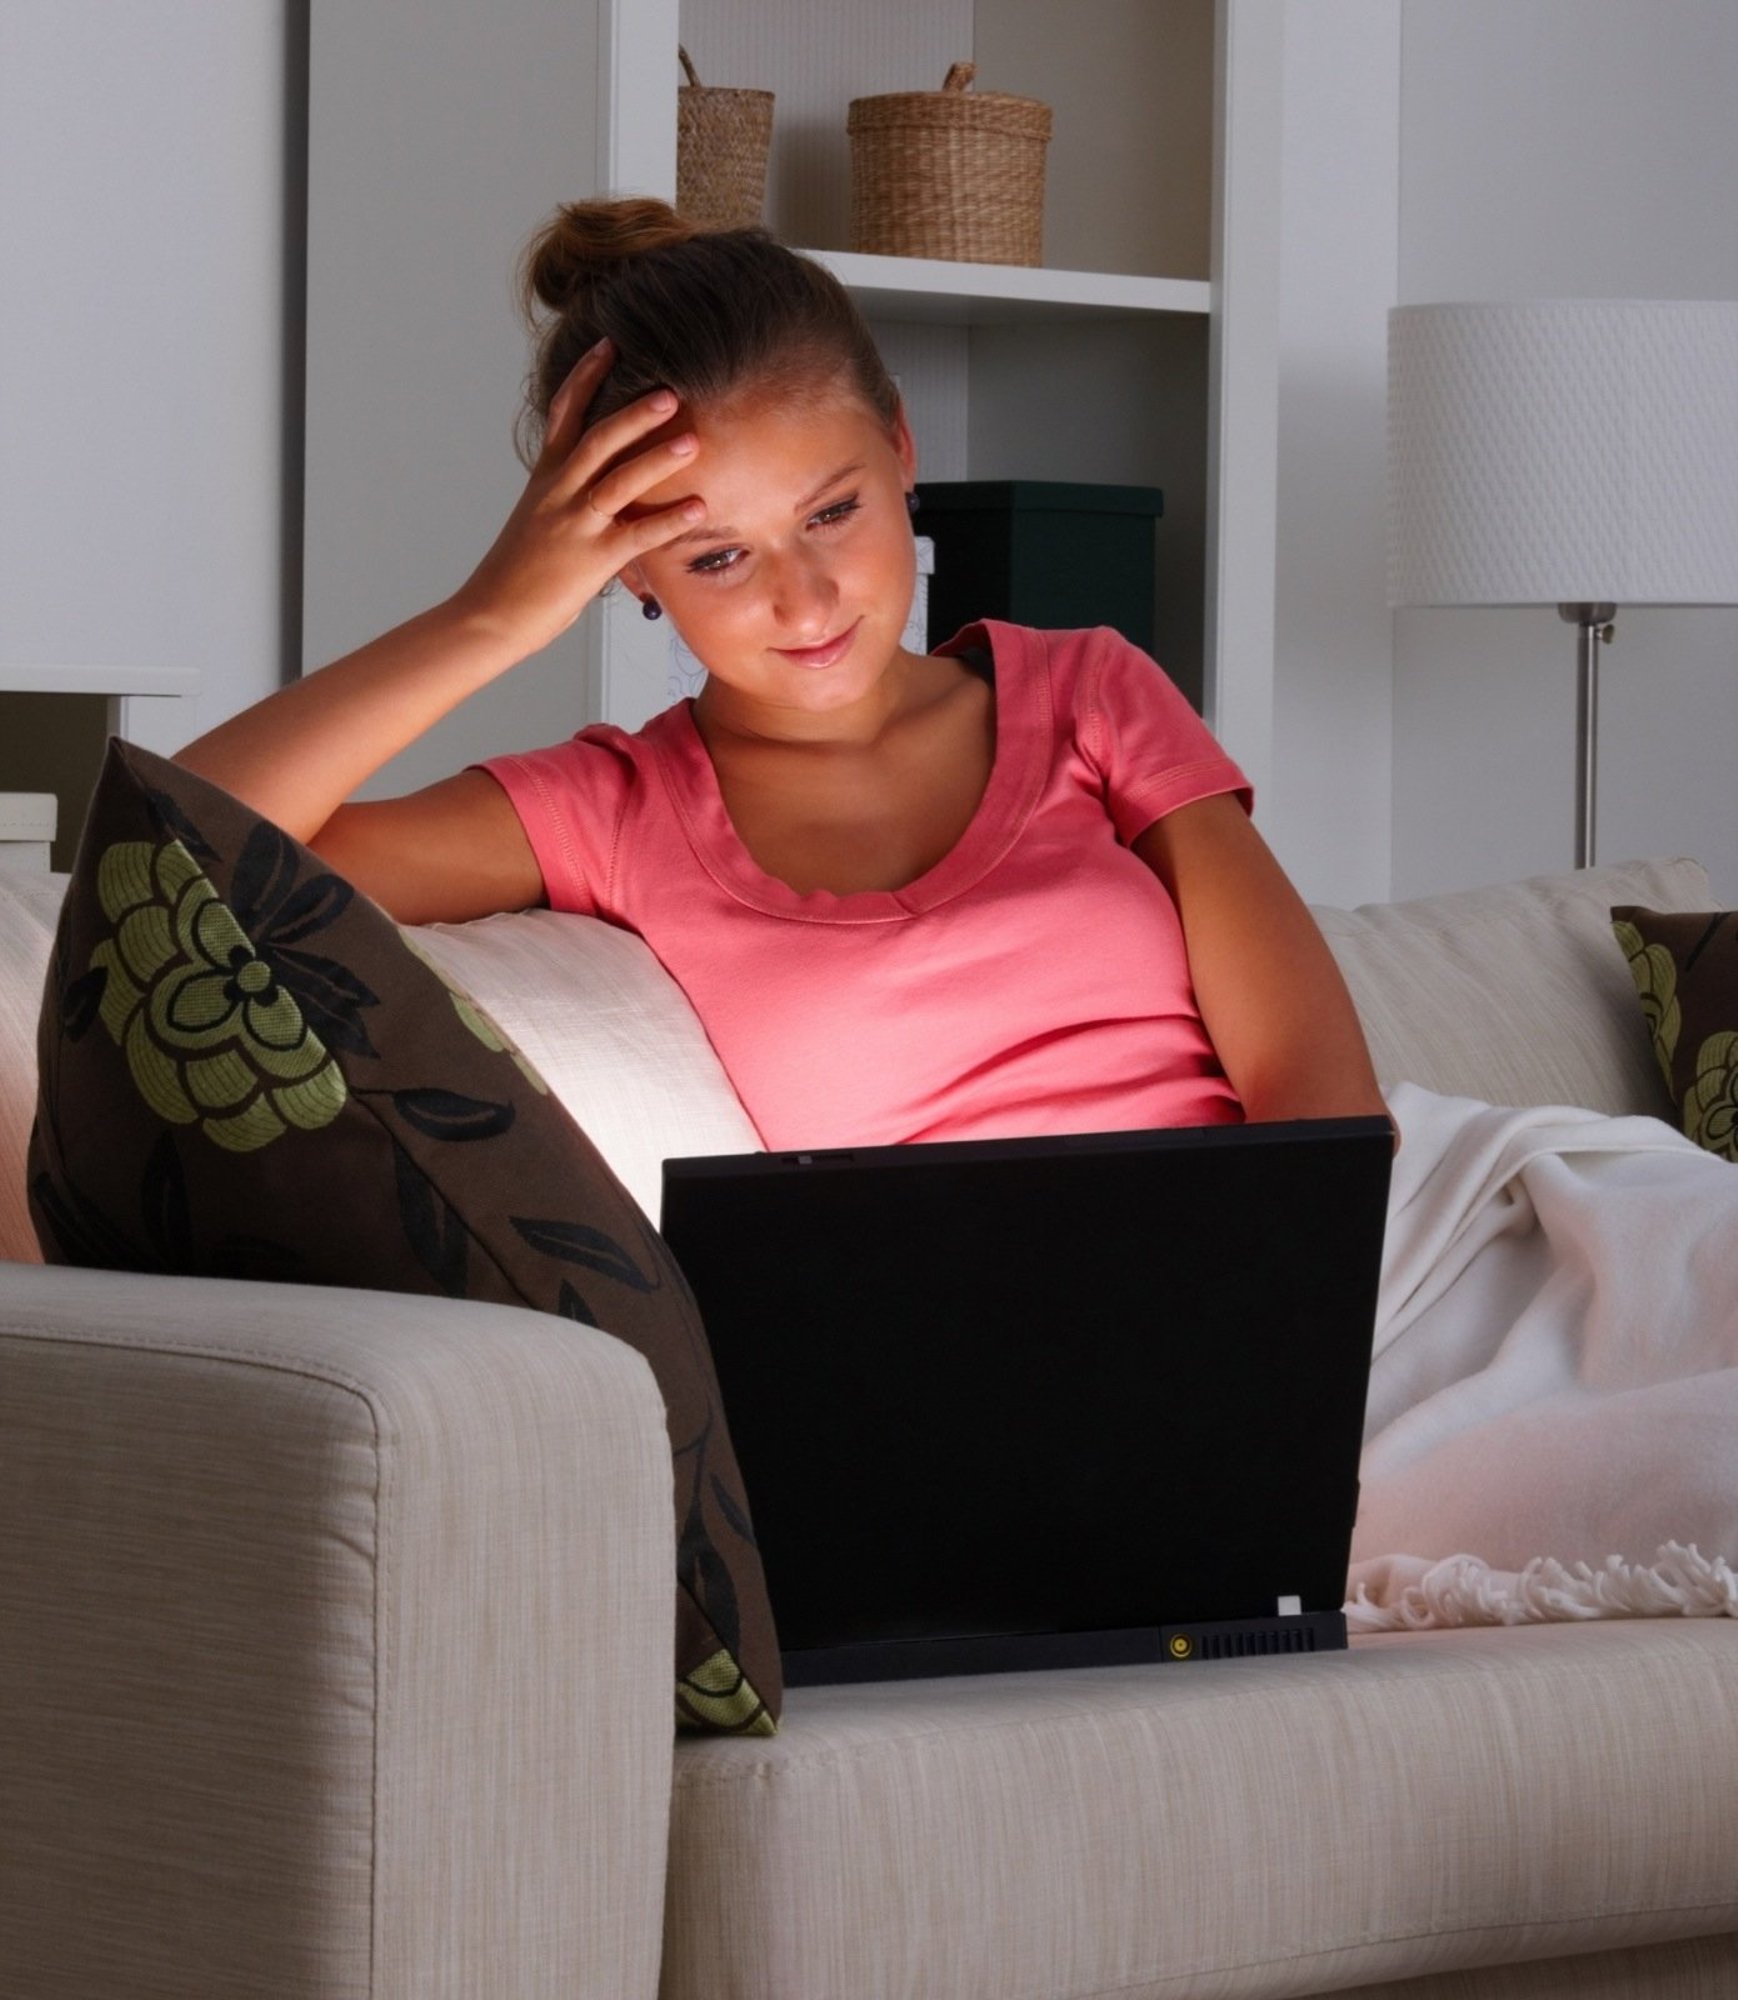 Сидим дома домашний. Девушка за ноутбуком. Девушка сидит за компьютером. Подросток и компьютер. Подросток с ноутбуком.